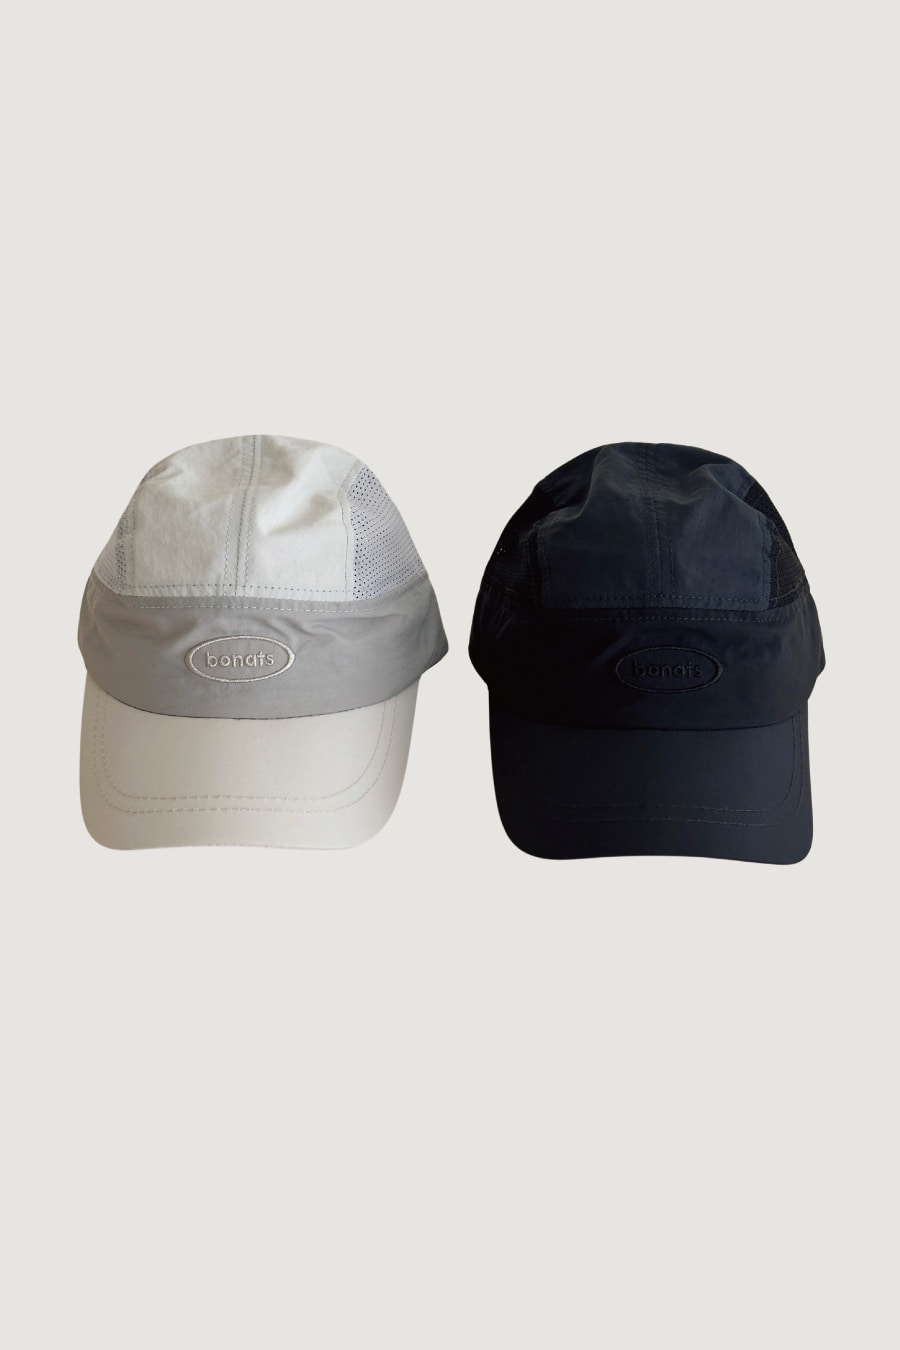 Nats Two-tone Nylon cap